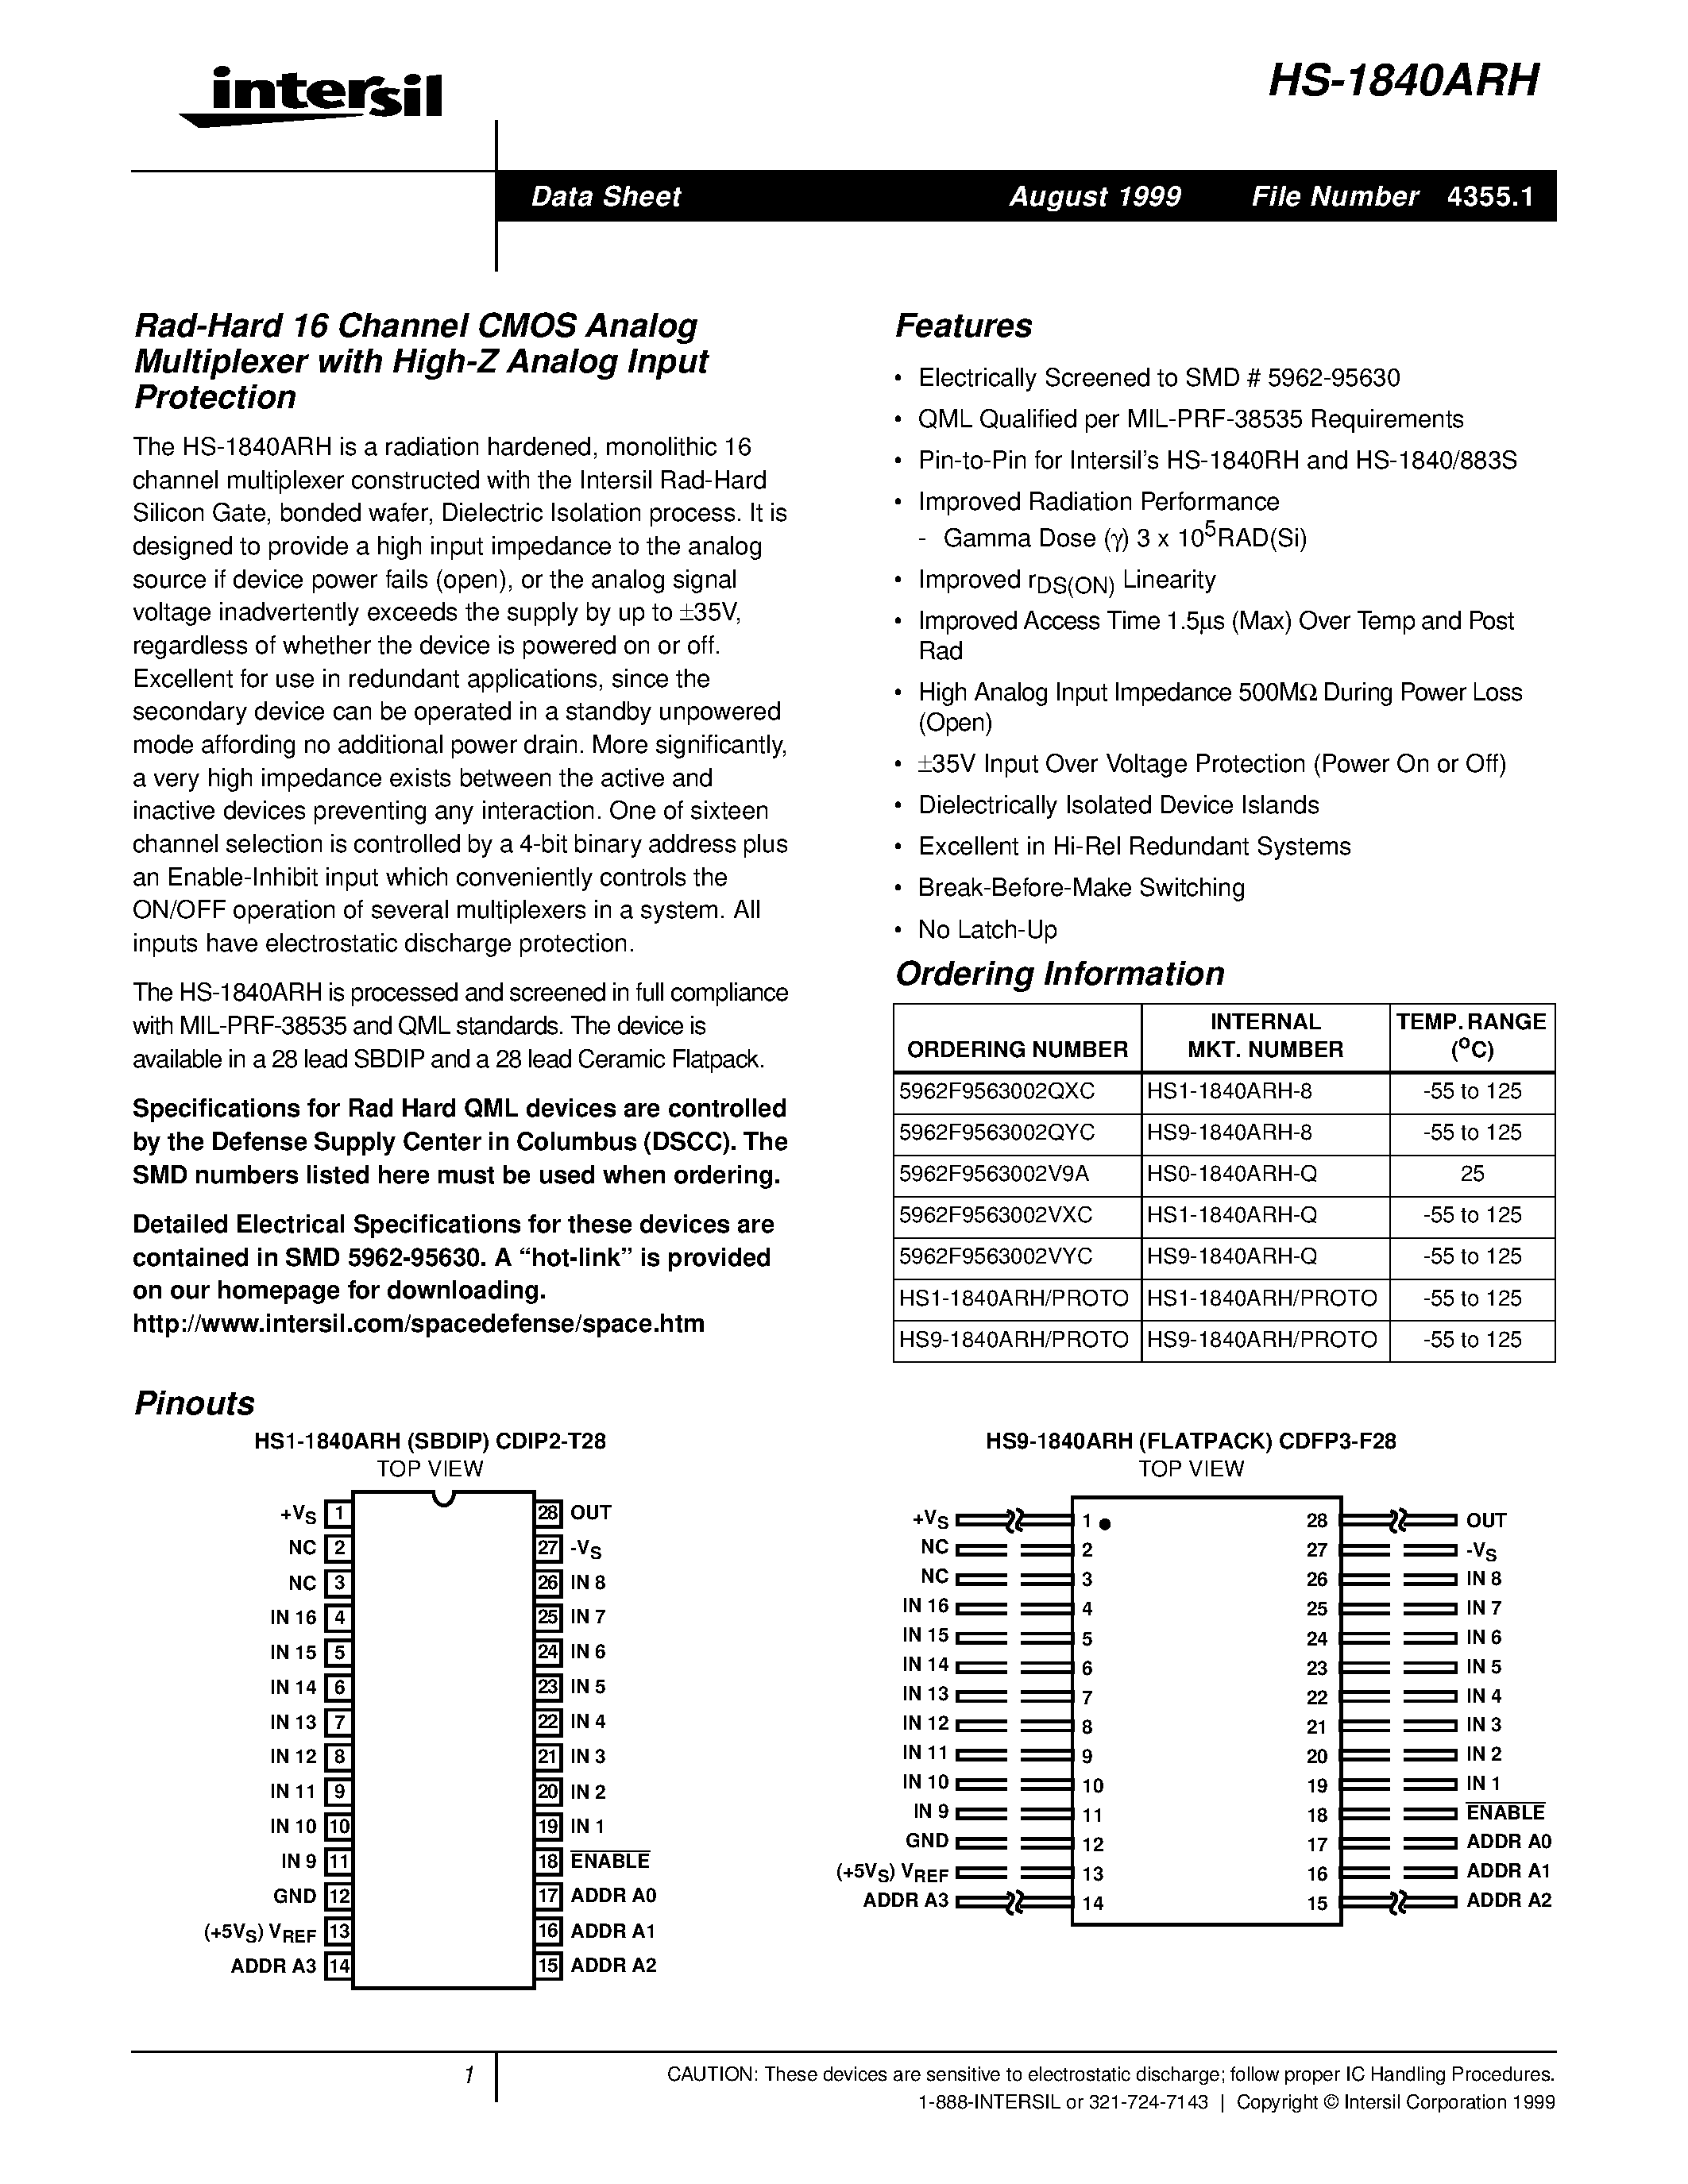 Даташит HS9-1840ARH-Q - Rad-Hard 16 Channel CMOS Analog Multiplexer with High-Z Analog Input Protection страница 1